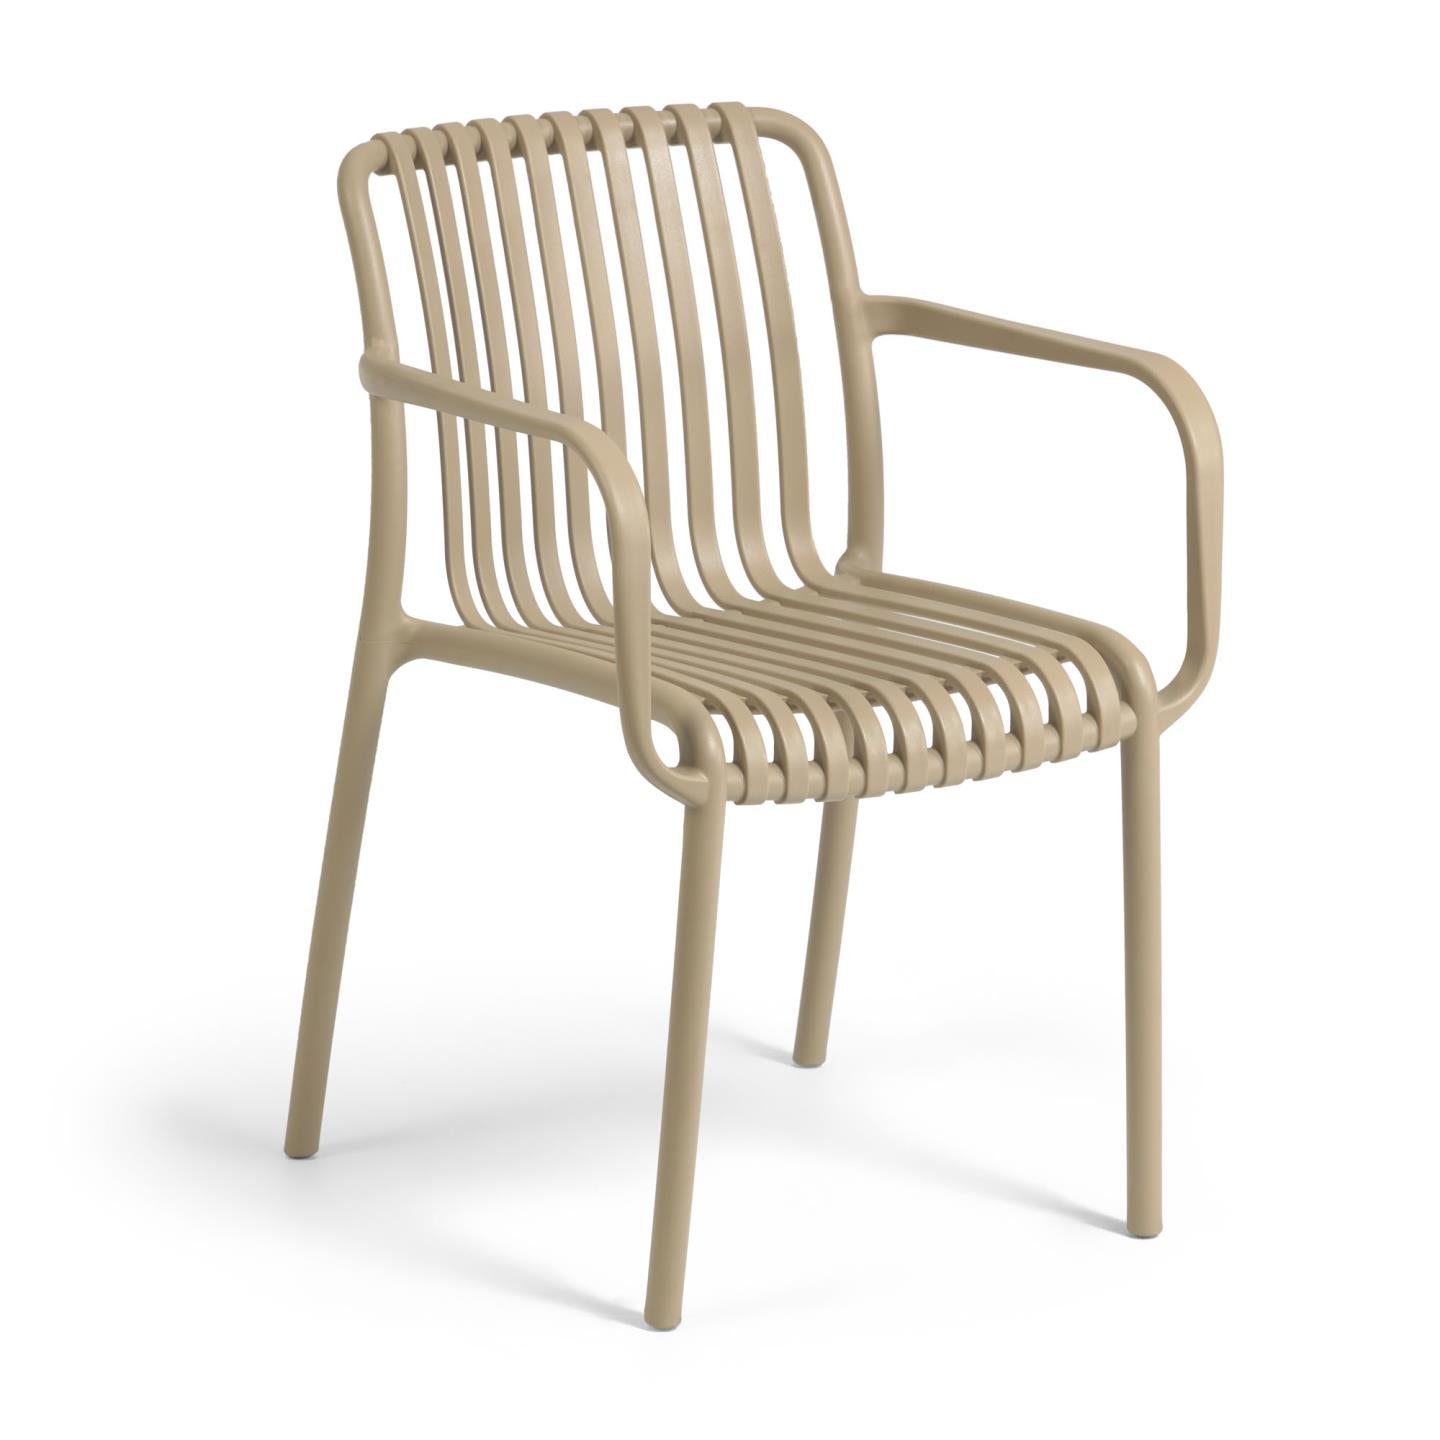 Isabellini stackable outdoor chair in beige